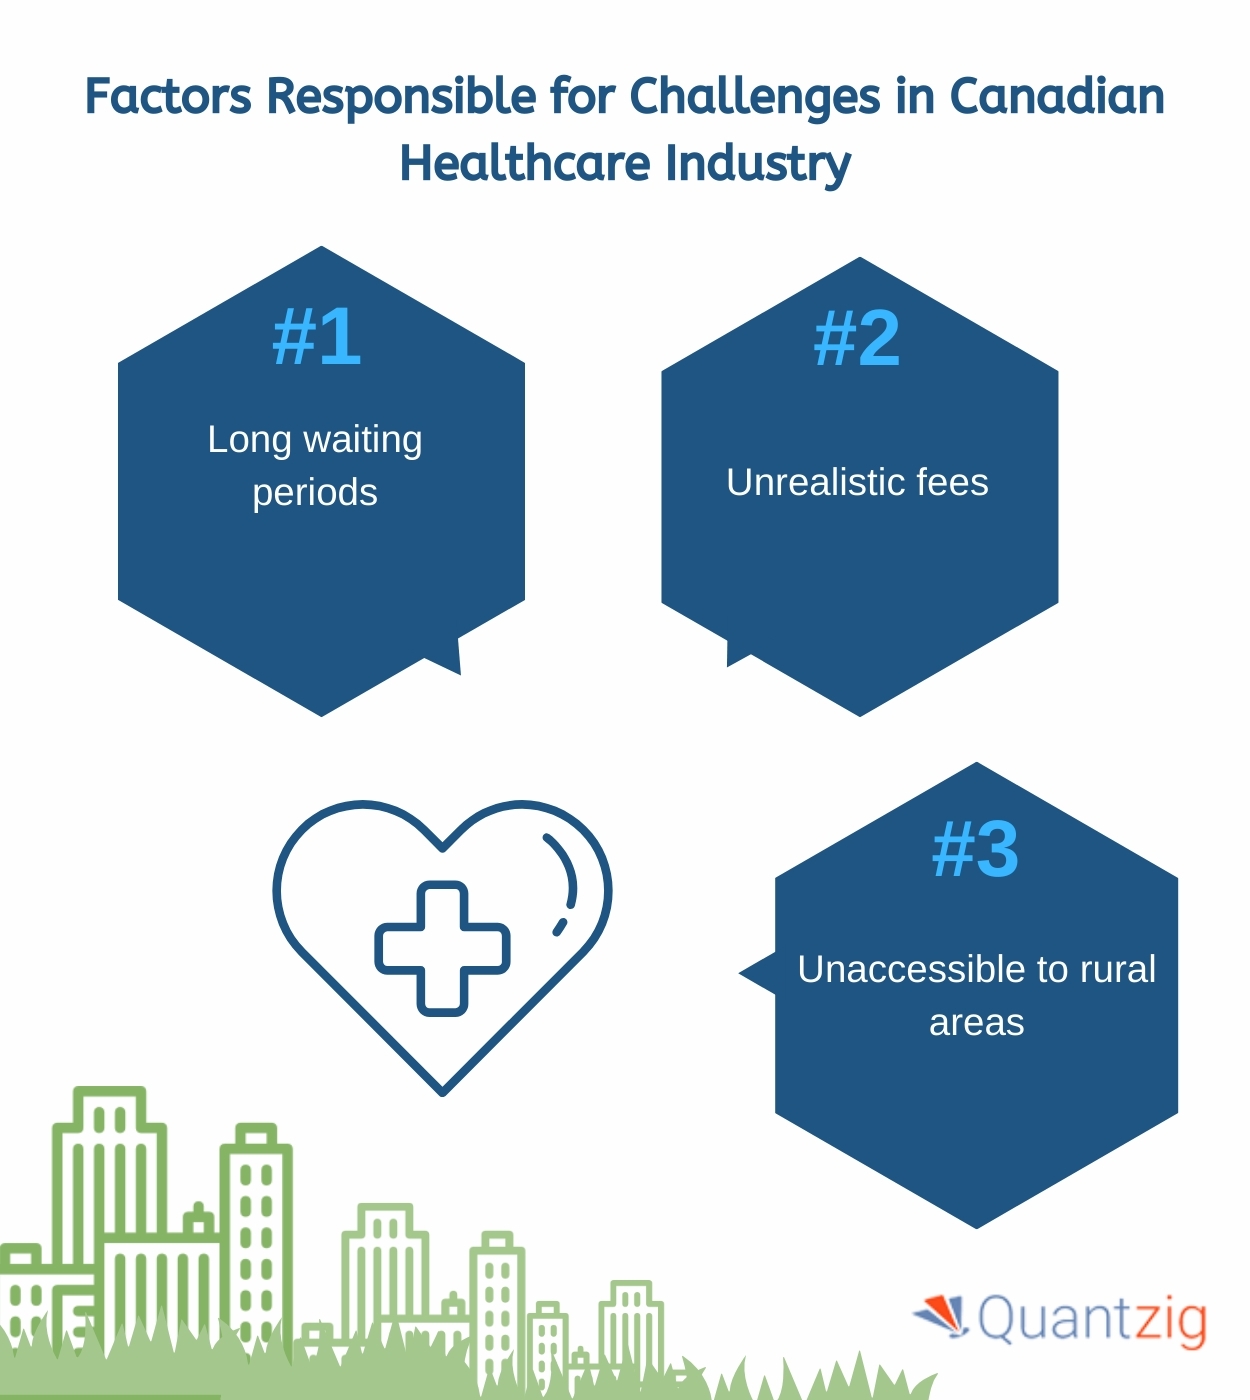 Quantzig’s Healthcare Analytics Experts Reveal Factors Impacting Canada